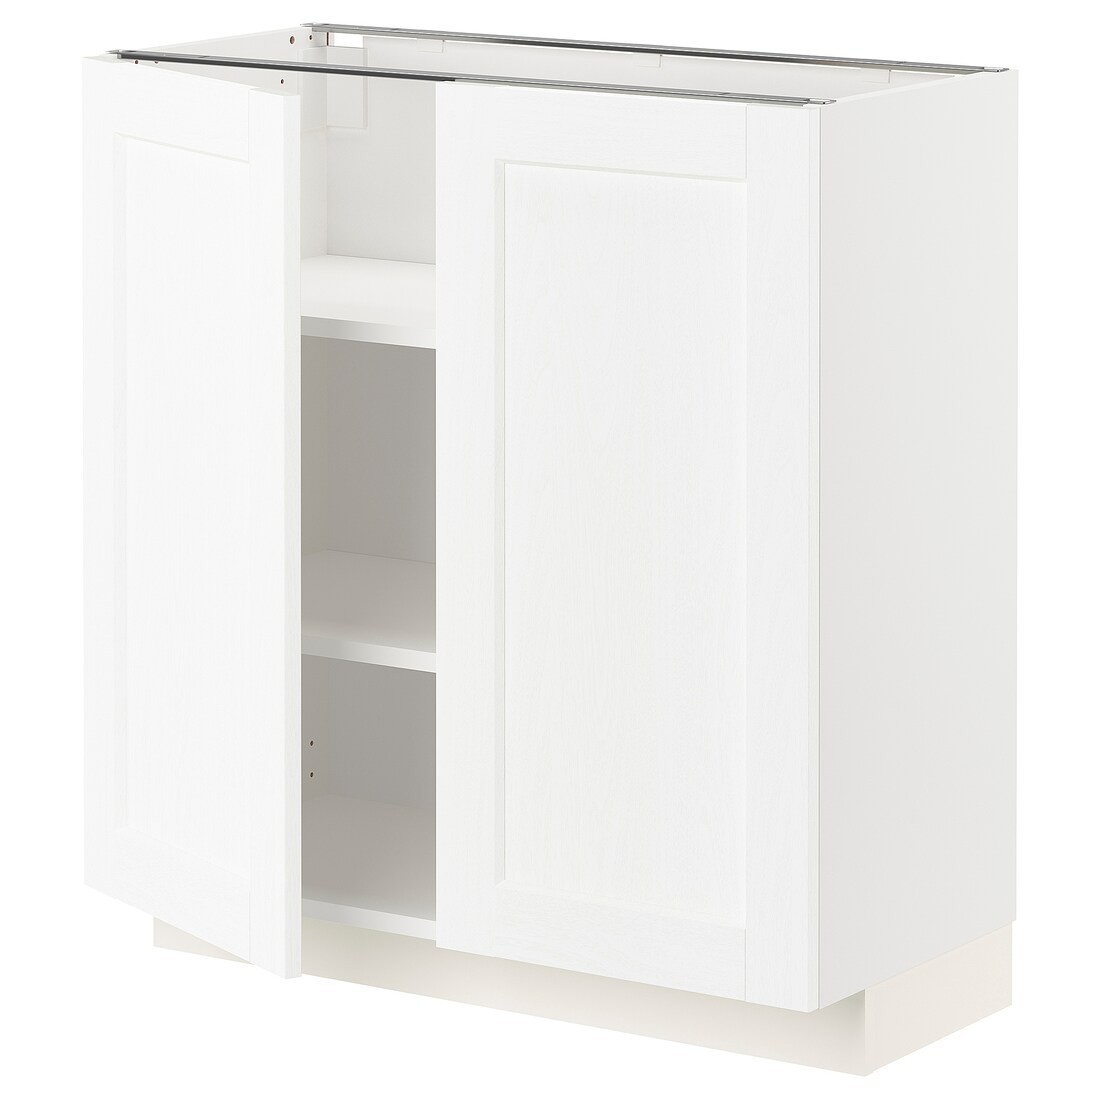 IKEA METOD МЕТОД Напол шкаф с полками / 2 двери, белый Enköping / белый имитация дерева, 80x37 см 09473373 094.733.73